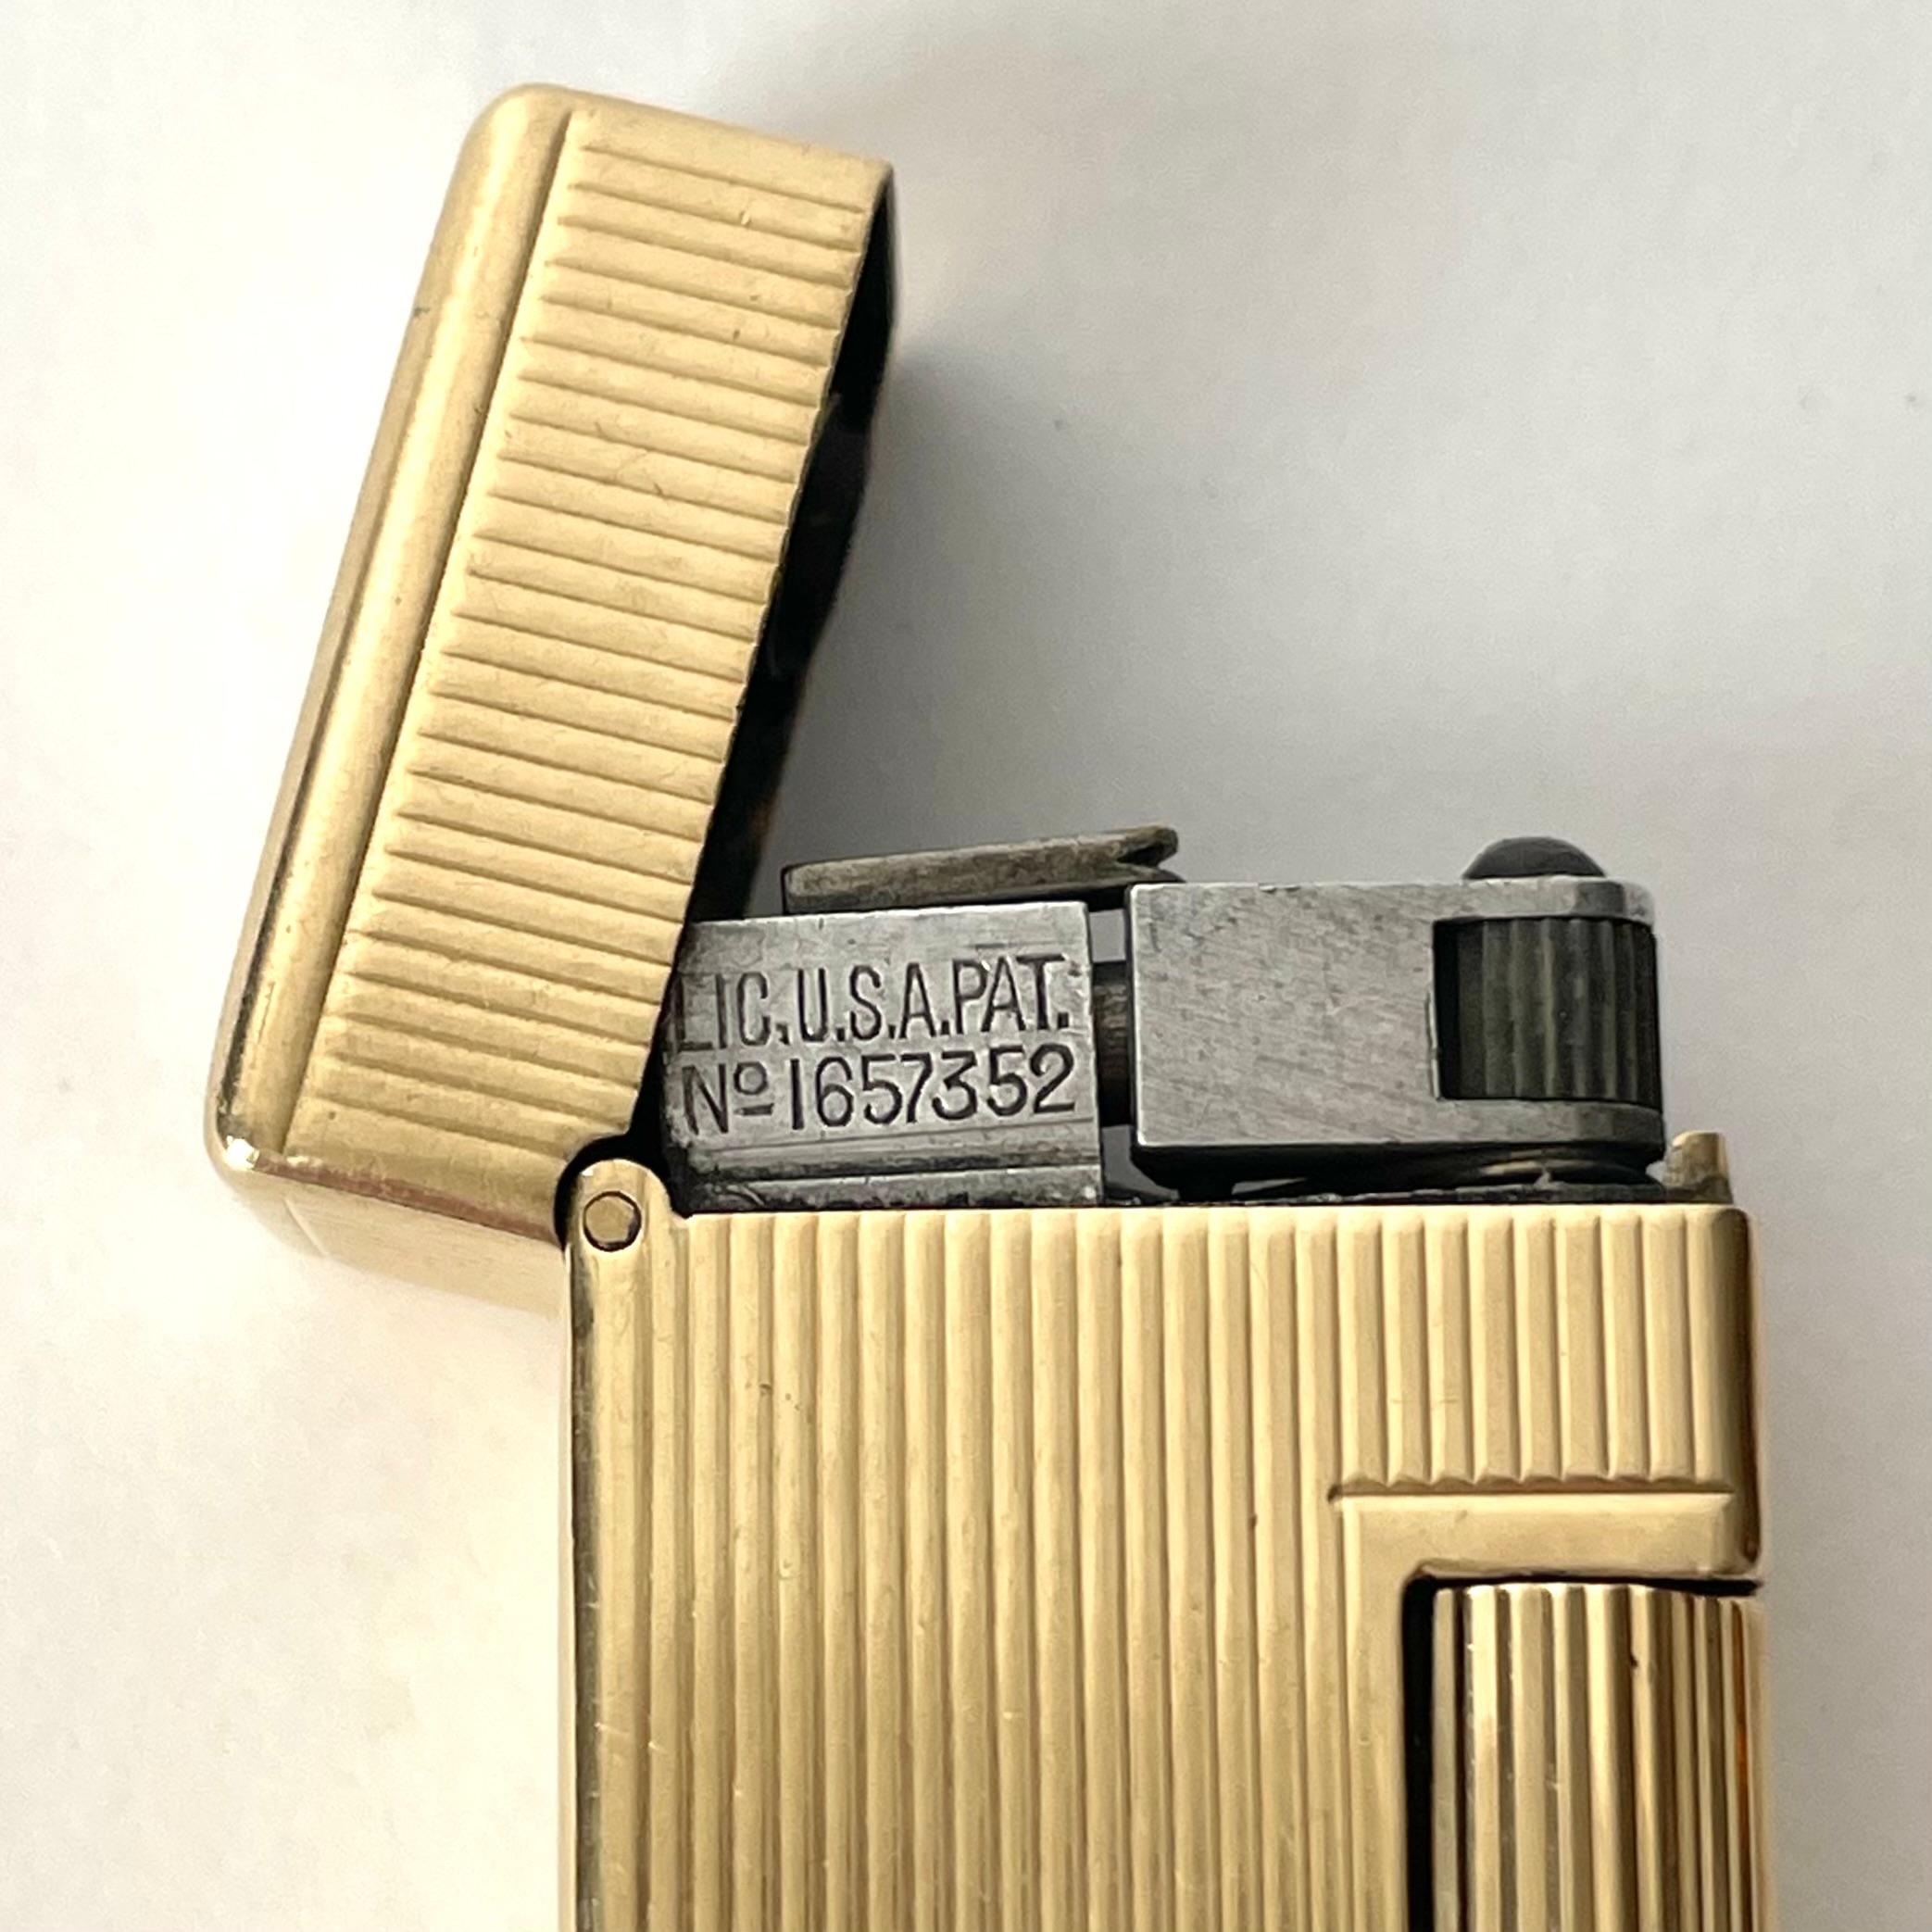 Dunhill 14 Carat Gold Cigarette Gasoline Lighter from 1940s-1950s 4